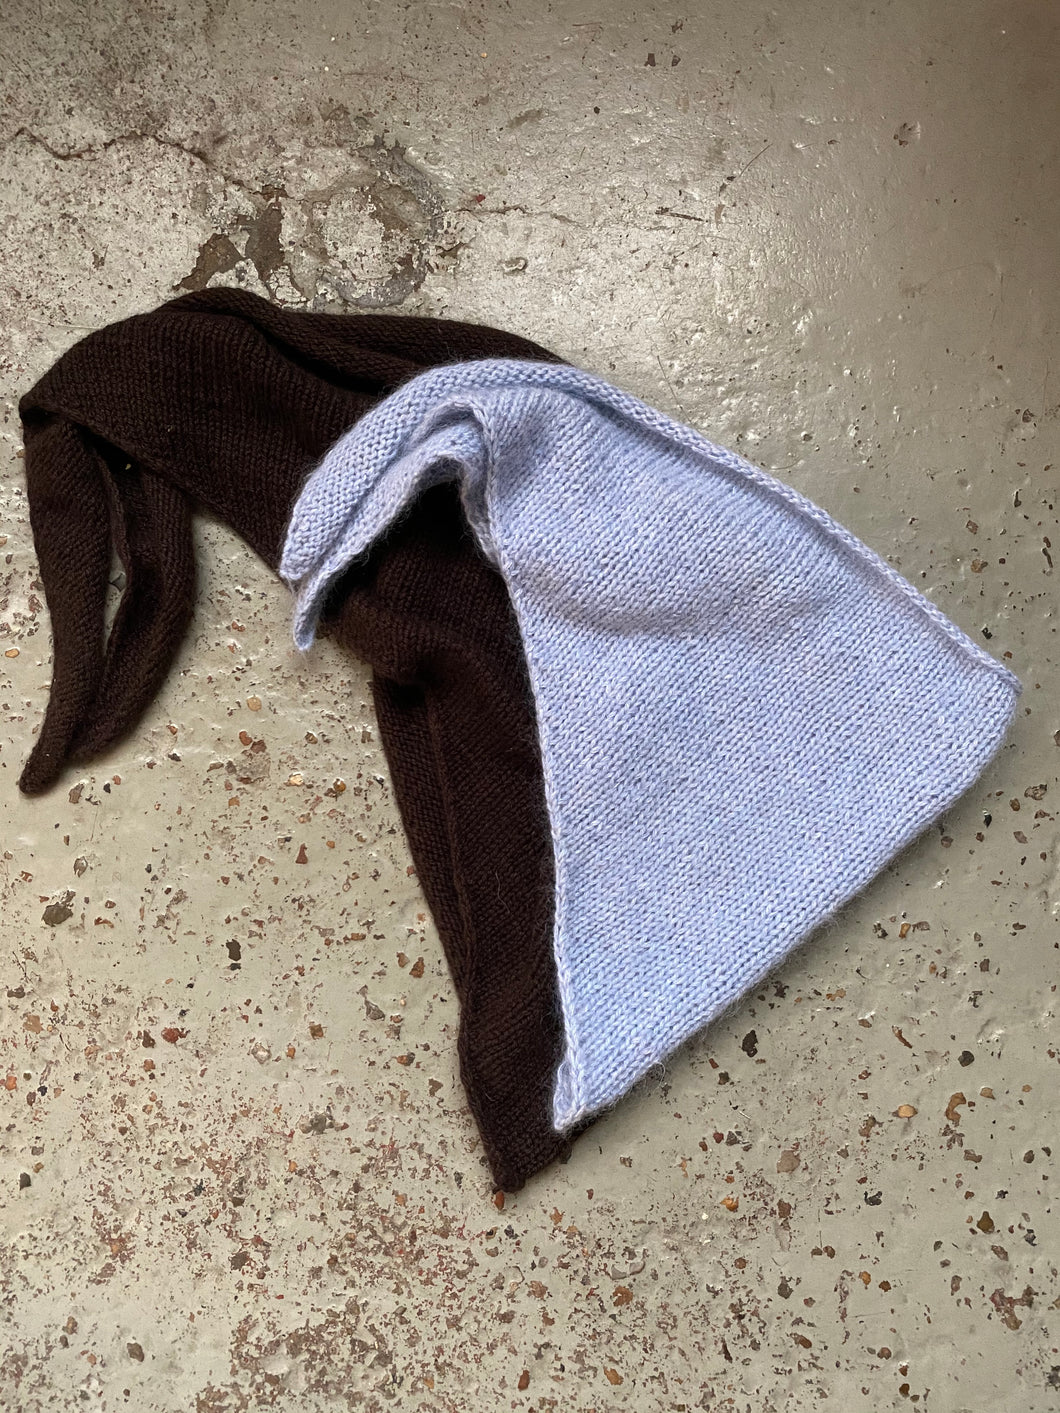 Deima's bandana - knitting pattern (dansk)